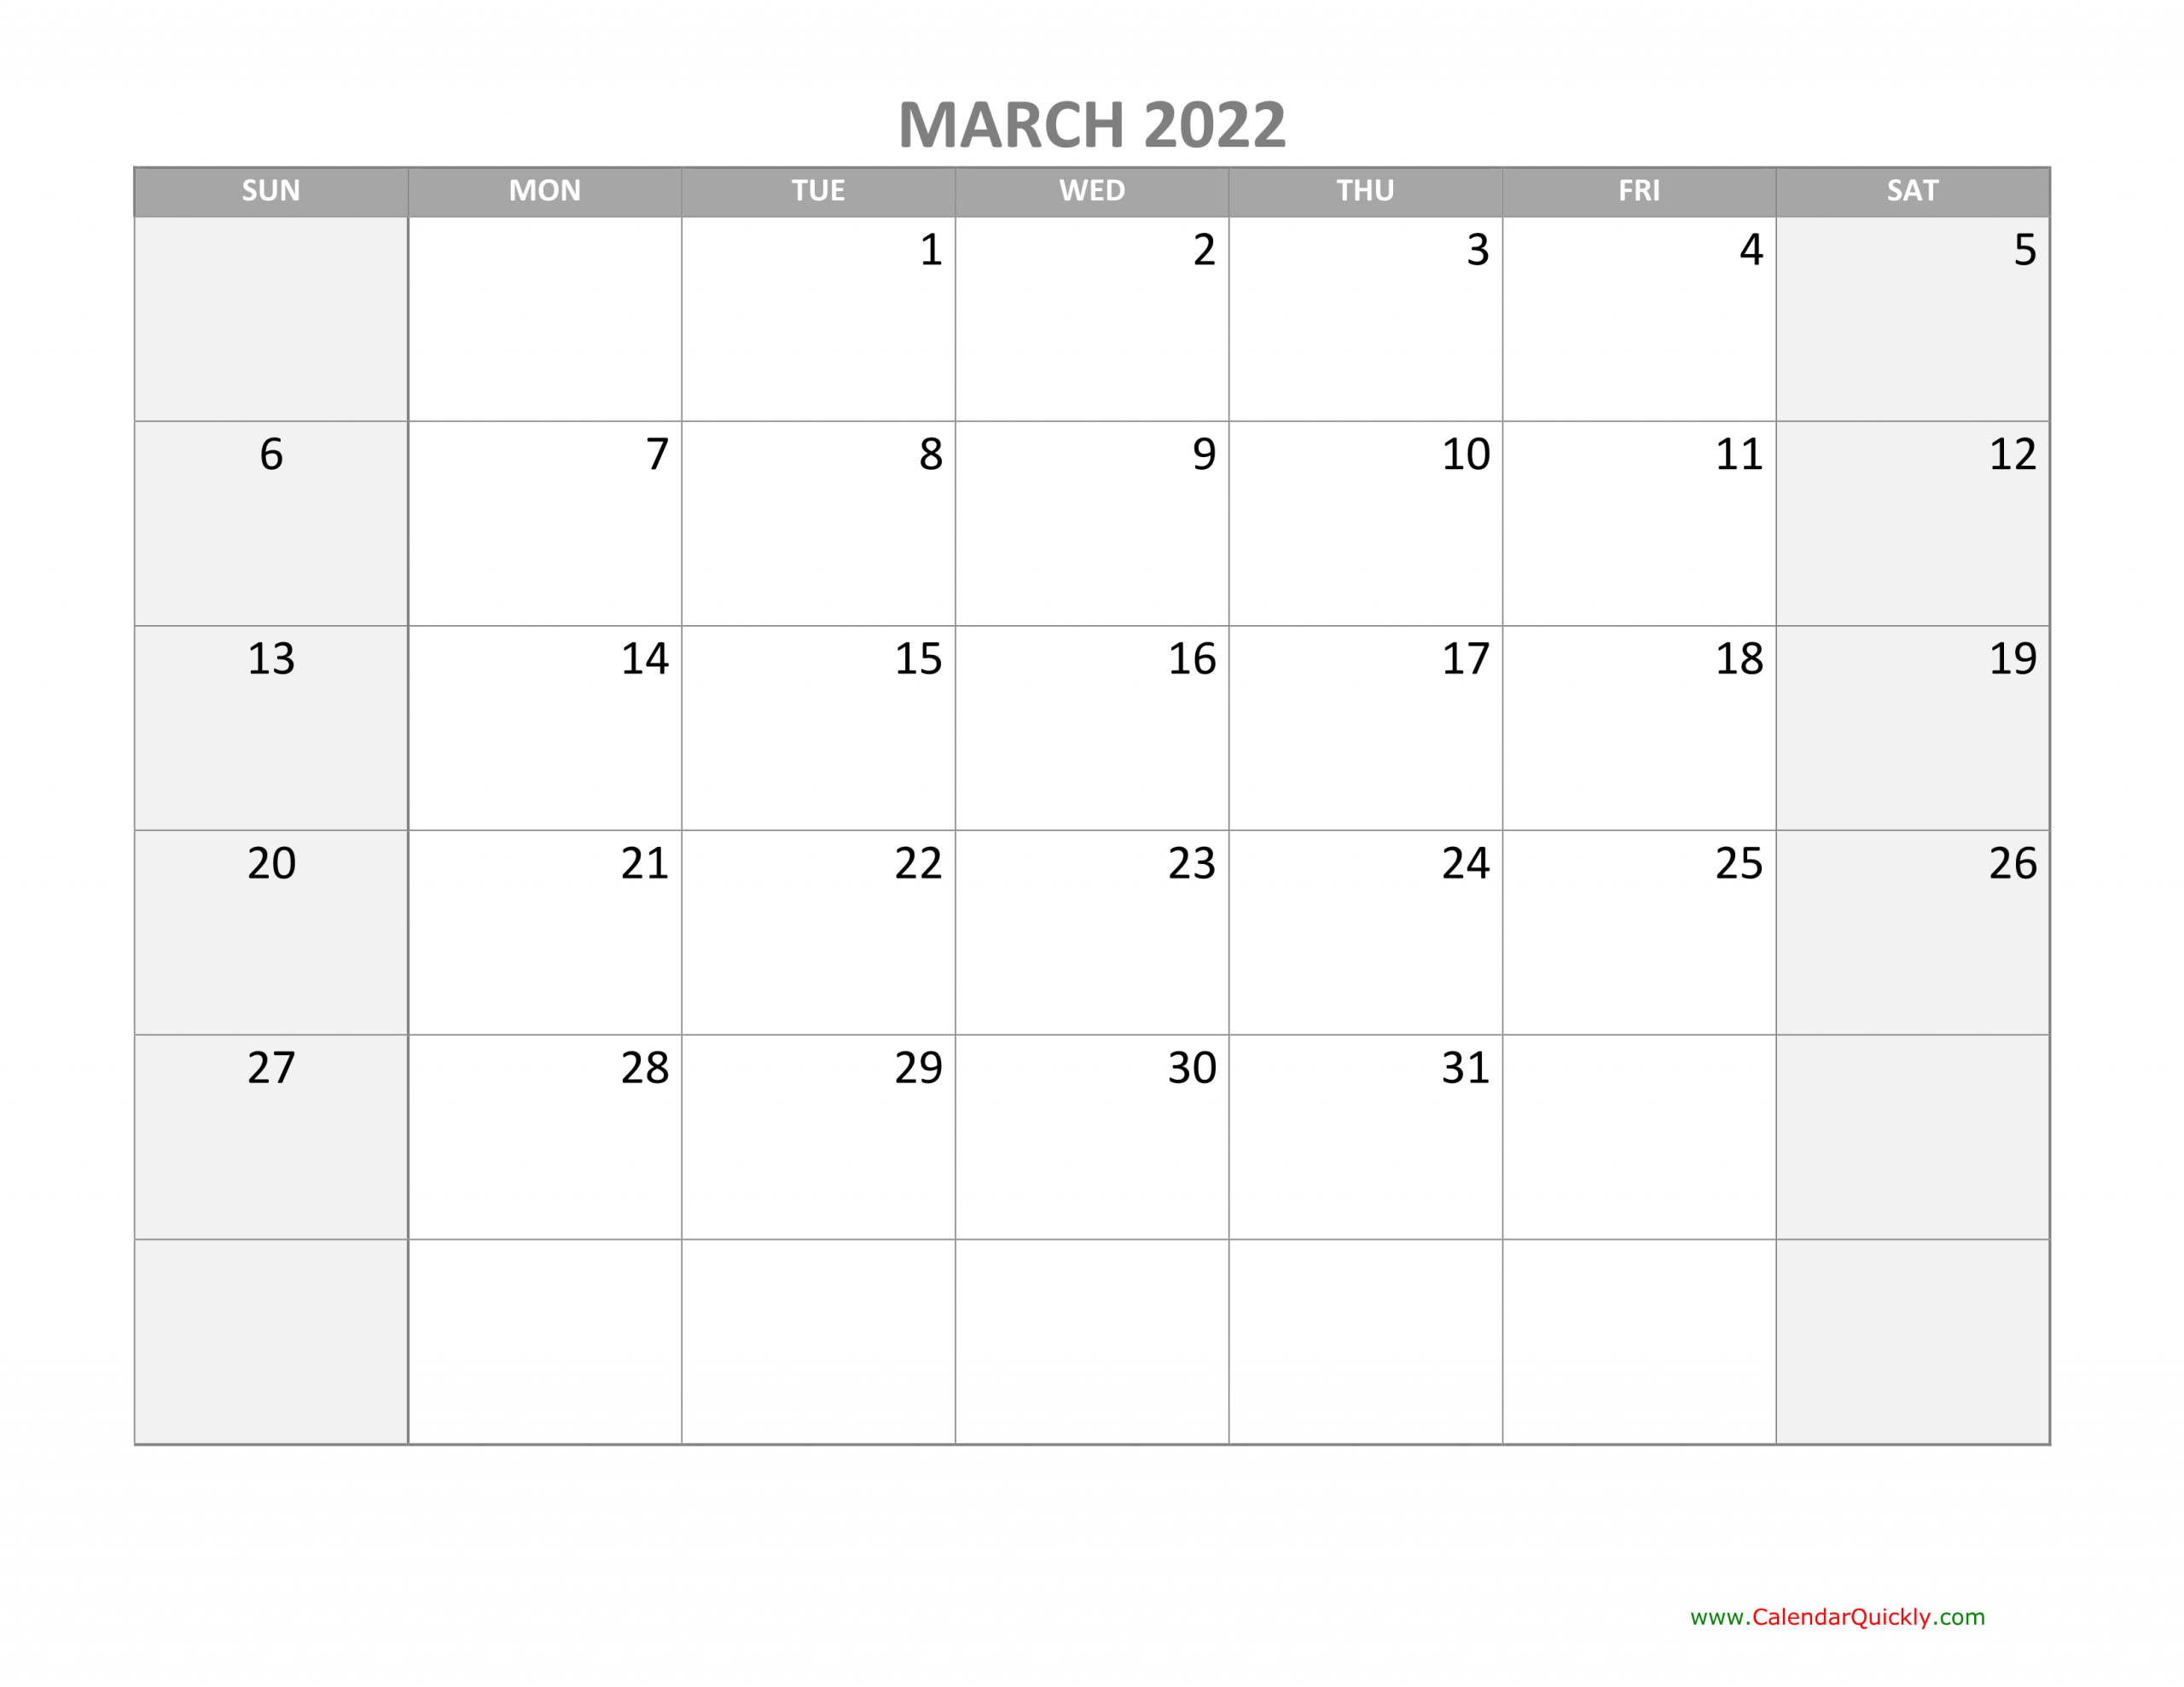 March Calendar 2022 With Holidays | Calendar Quickly